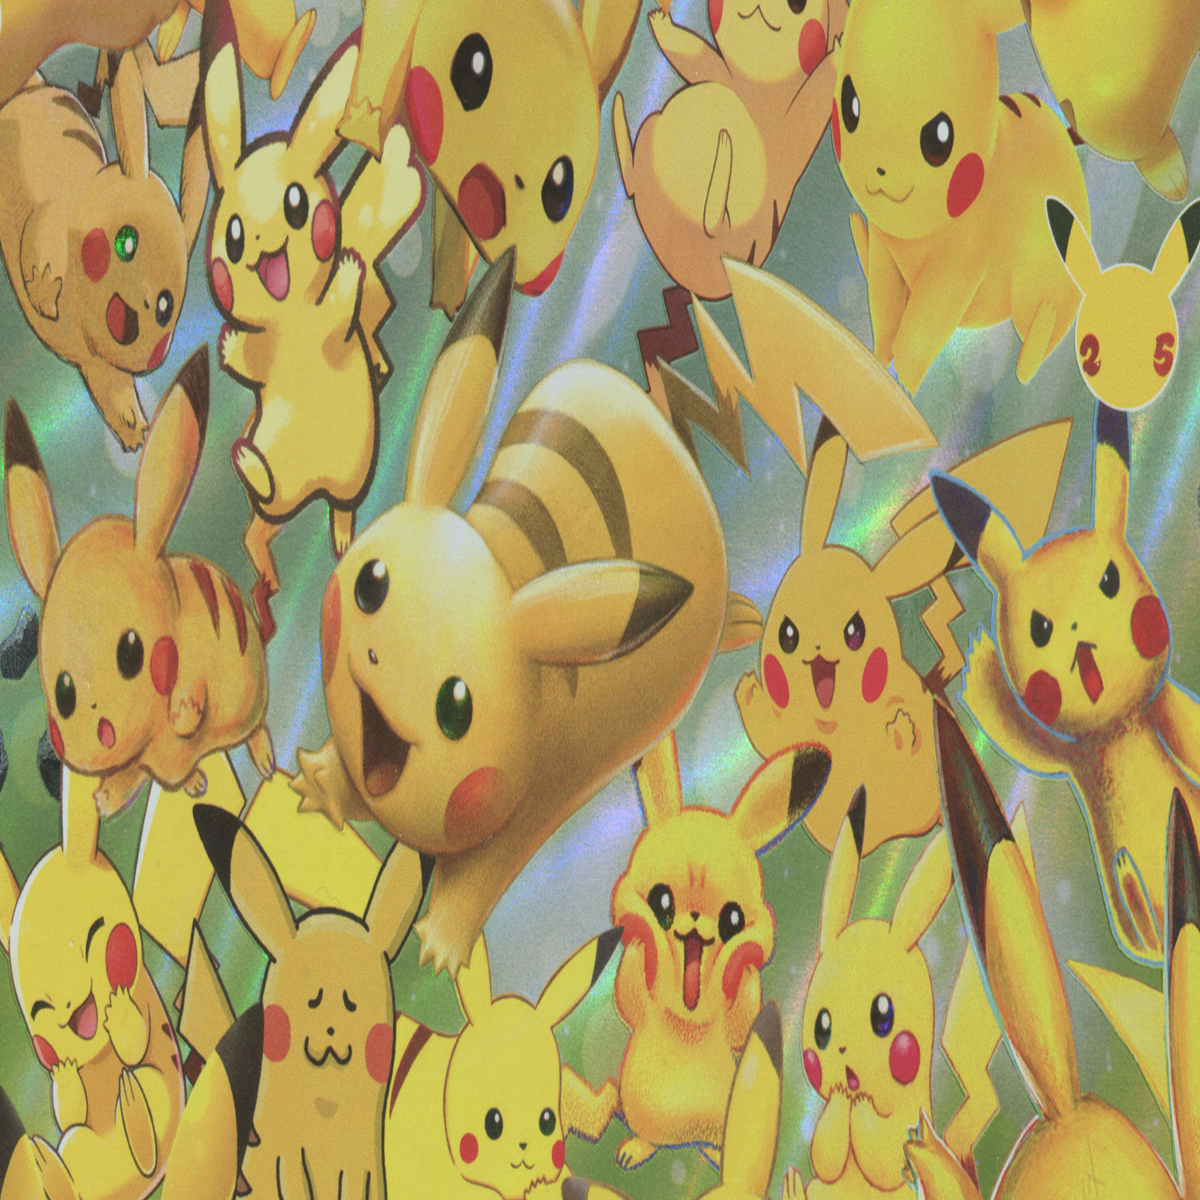 Shiny Pikachu  Pikachu wallpaper, Pikachu, Pokemon art